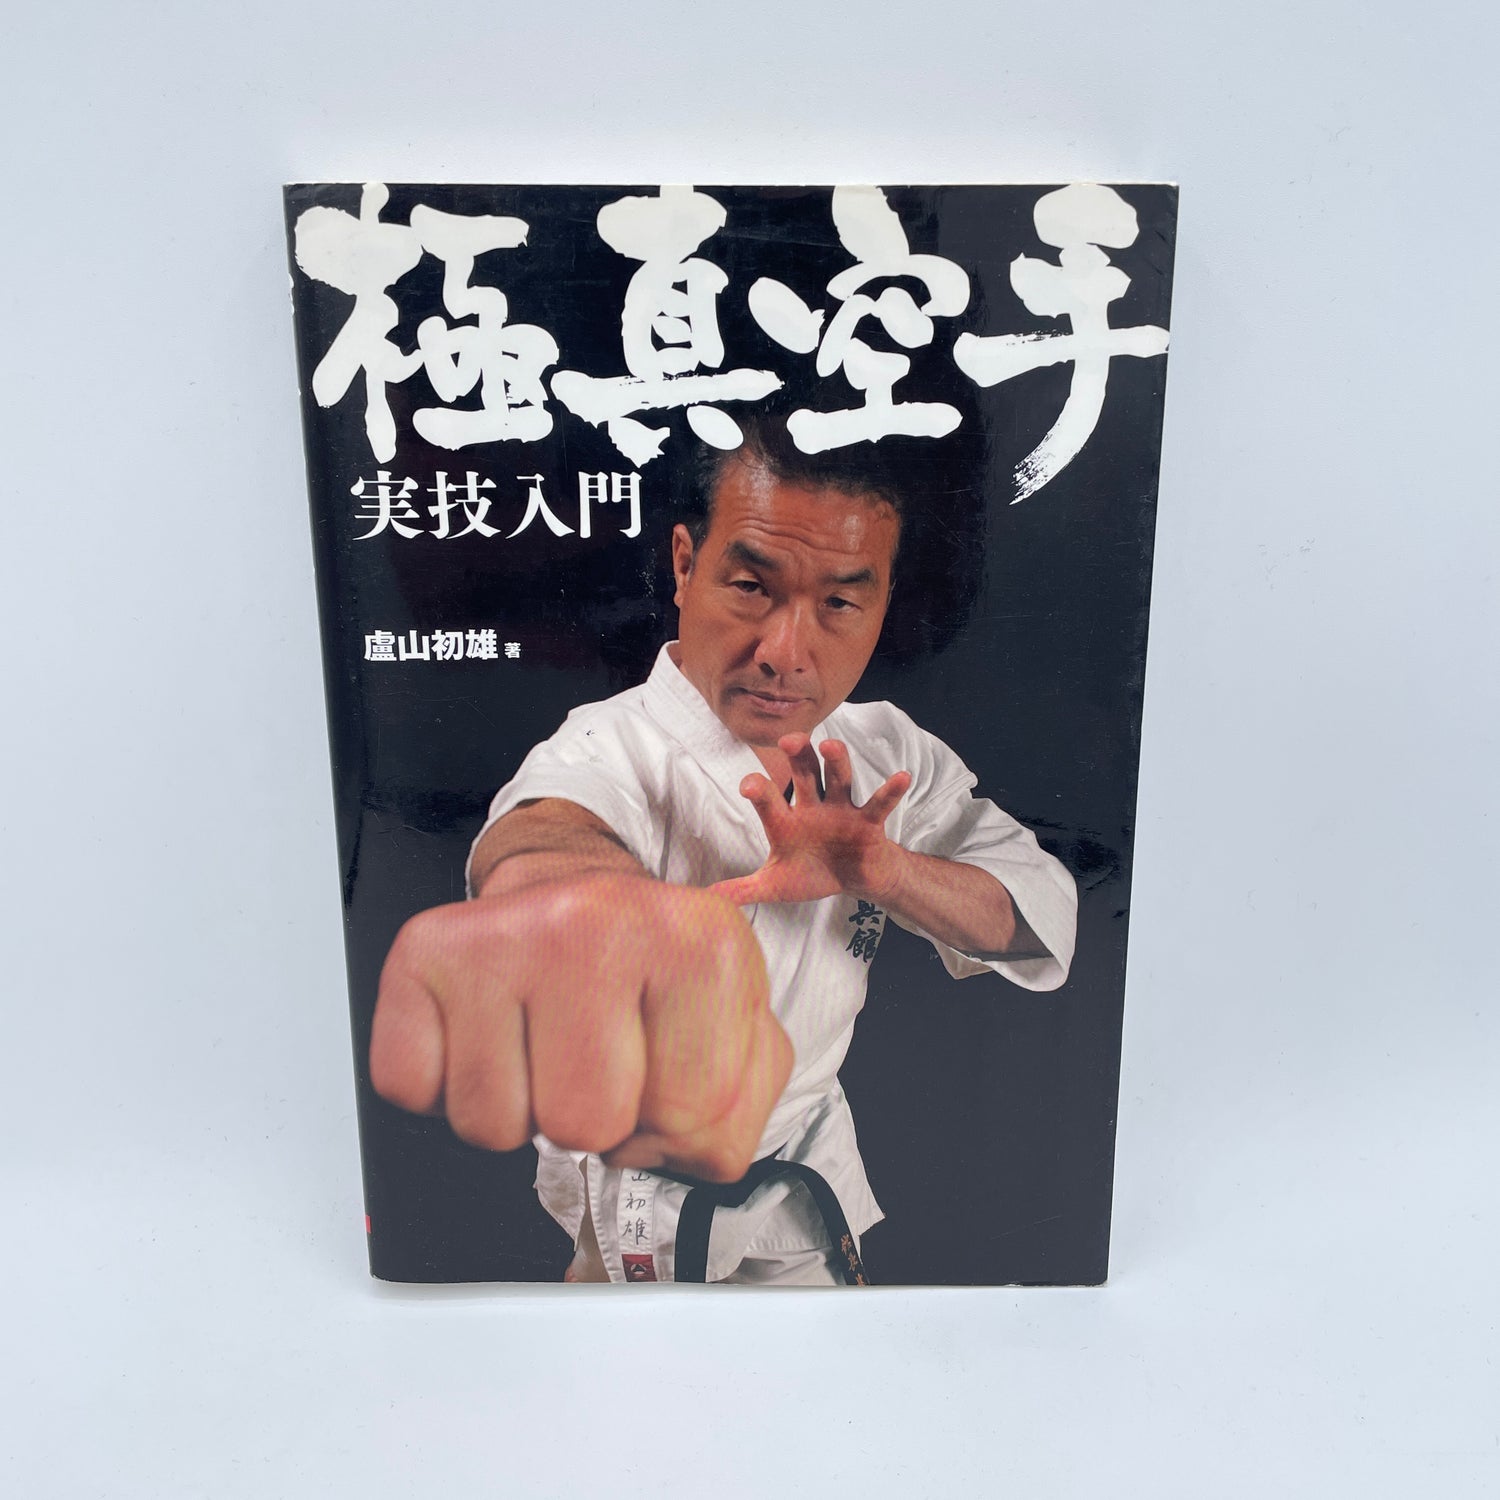 Intro to Kyokushin Karate Striking Book by Hatsuo Royama (Preowned)